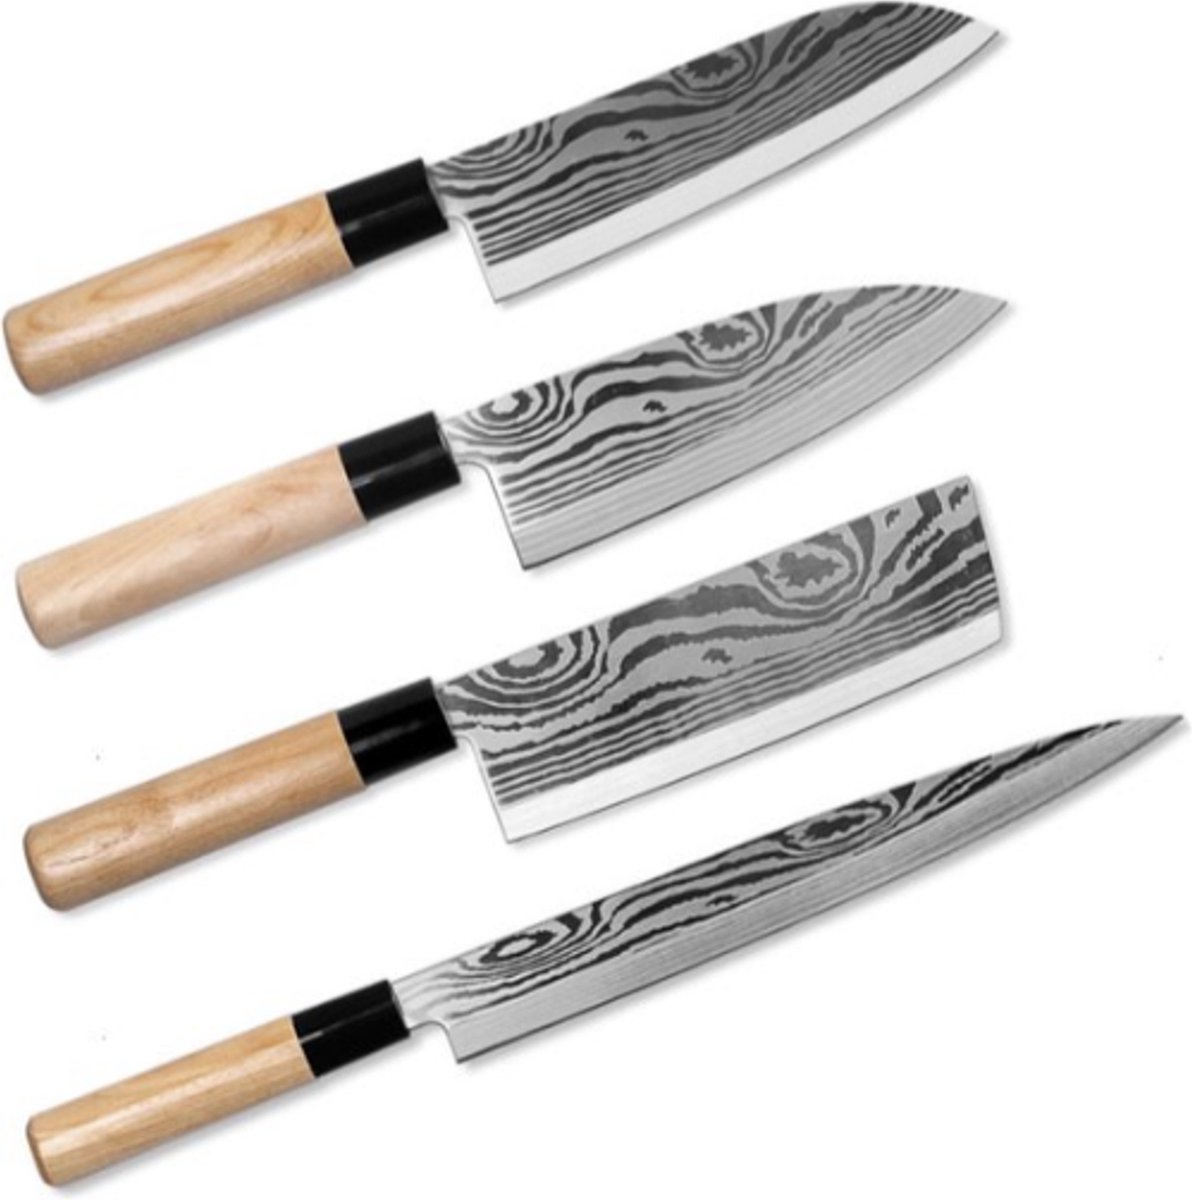 Blade Masters - Japanse messenset - Messenset - Messensets - Keukenmessen - 4-delig - Damascus - Koksmes - Fileermes - Blademaster